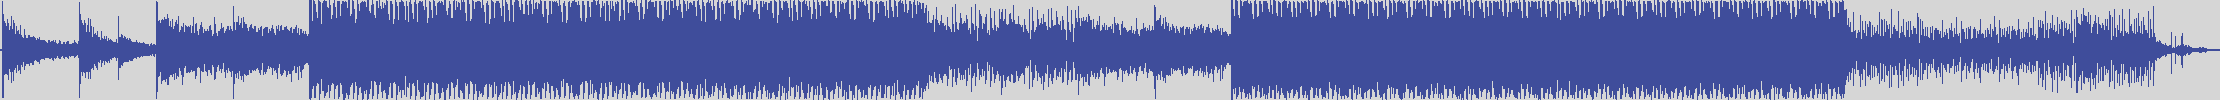 nf_boyz_records [NFY024] Golden - Deep [Sea Mix] audio wave form